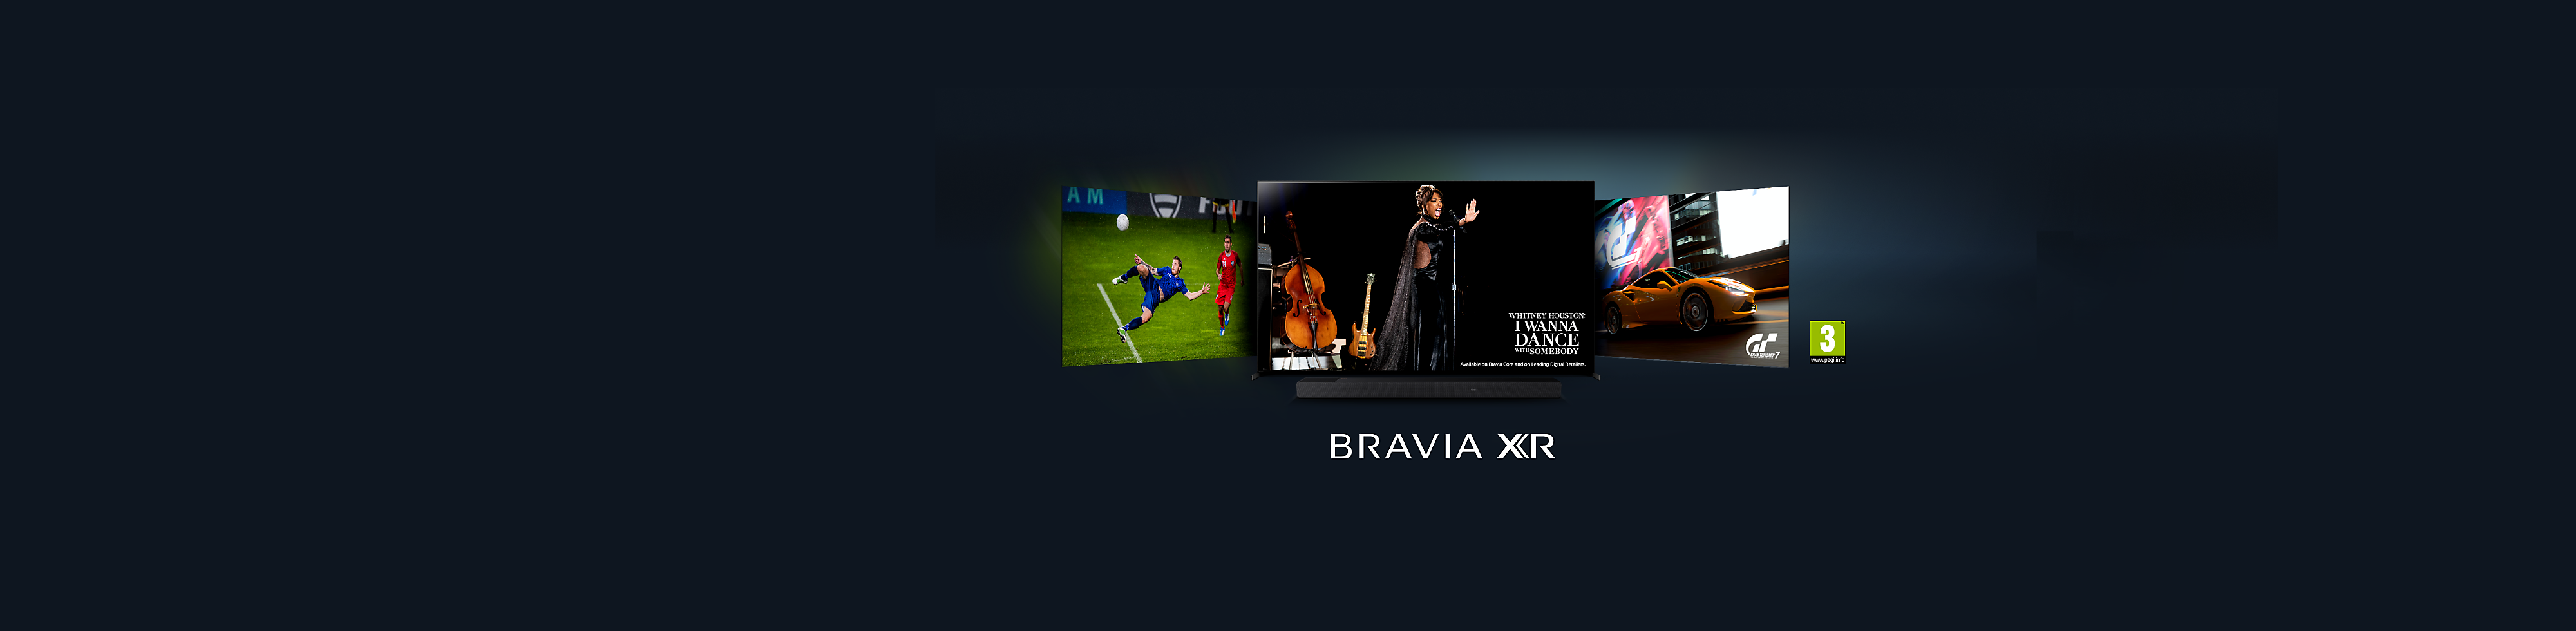 Scopri i nuovissimi TV BRAVIA XR